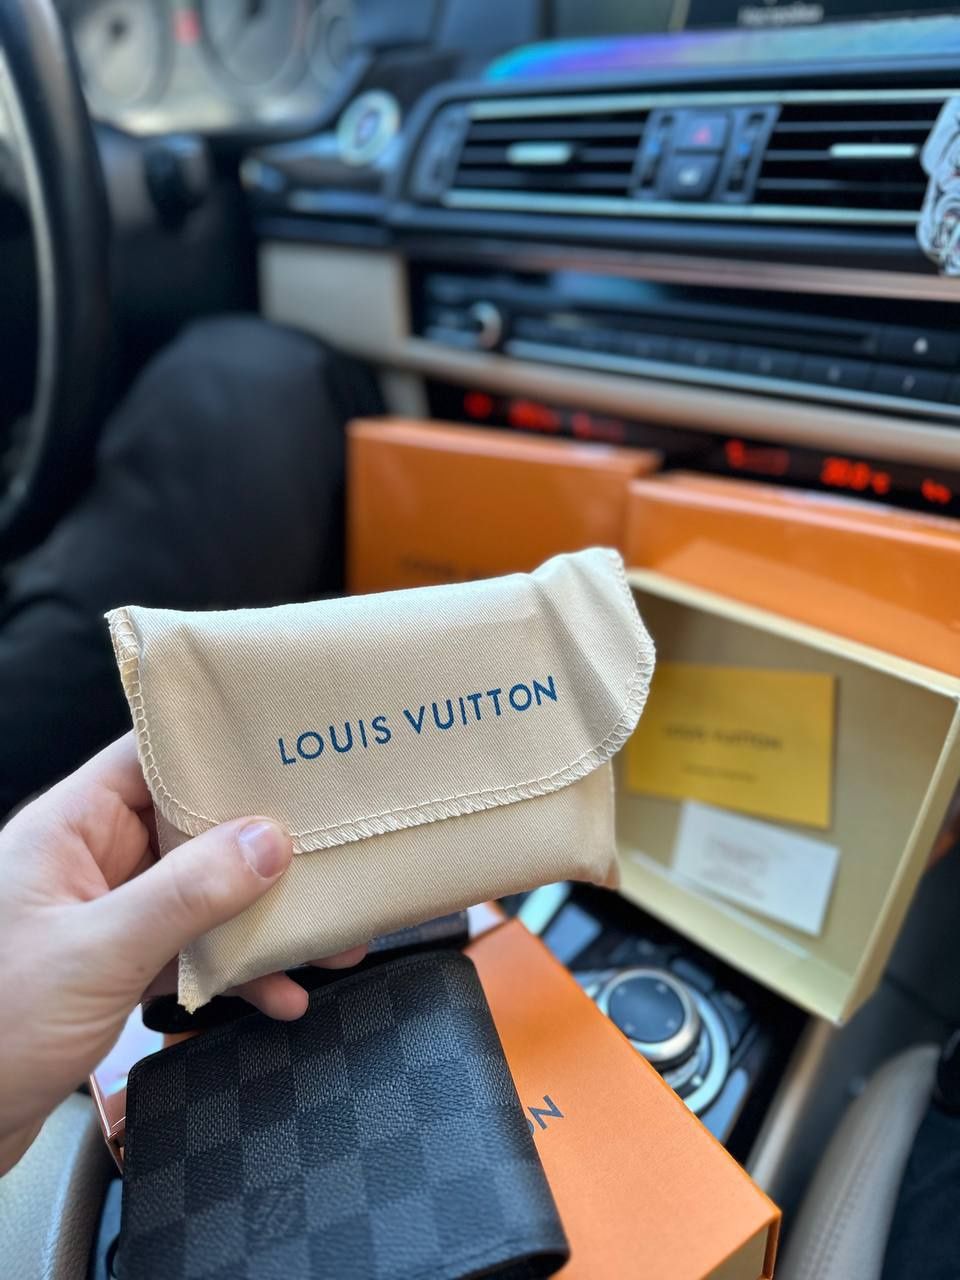 Гаманець Louis Vuitton, гаманець луі вітон, гаманець луи витон стильни